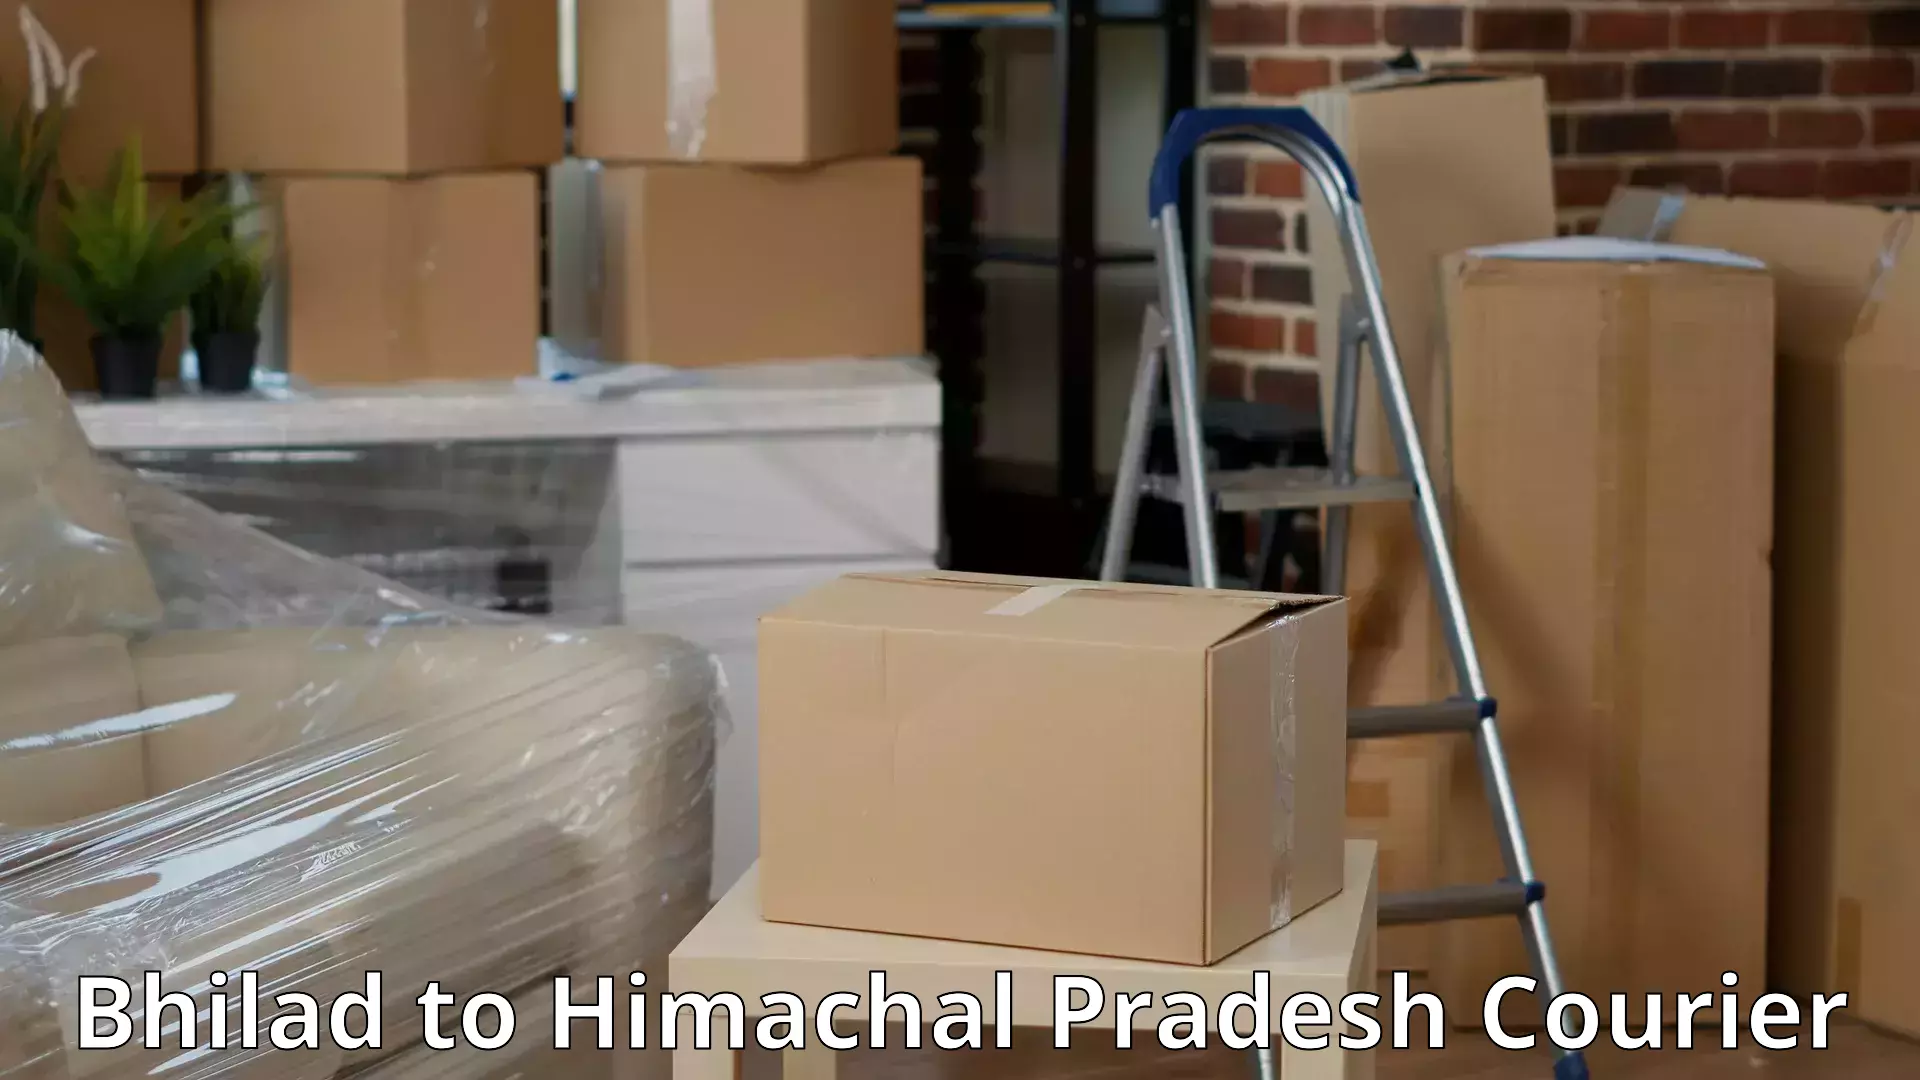 Professional moving company Bhilad to Kangra